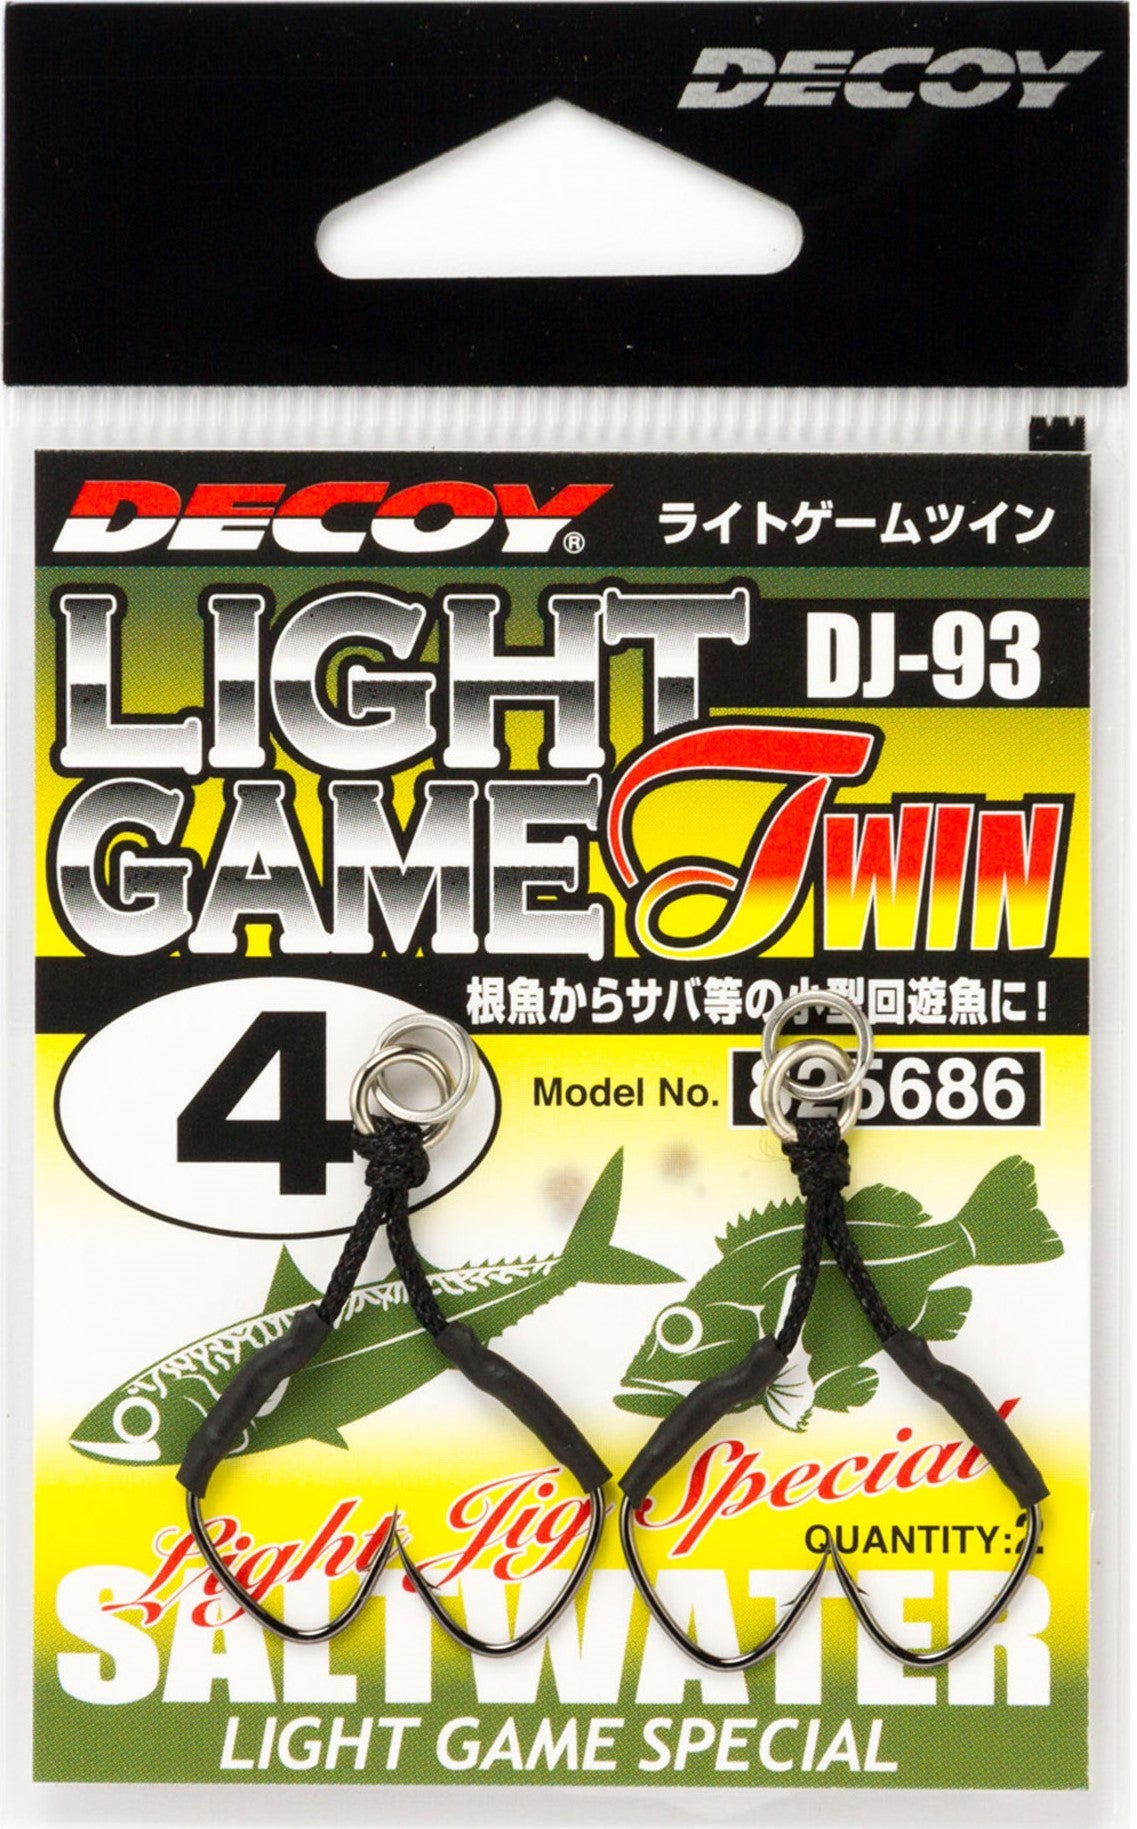 Decoy Light Game Twin (DJ-93)